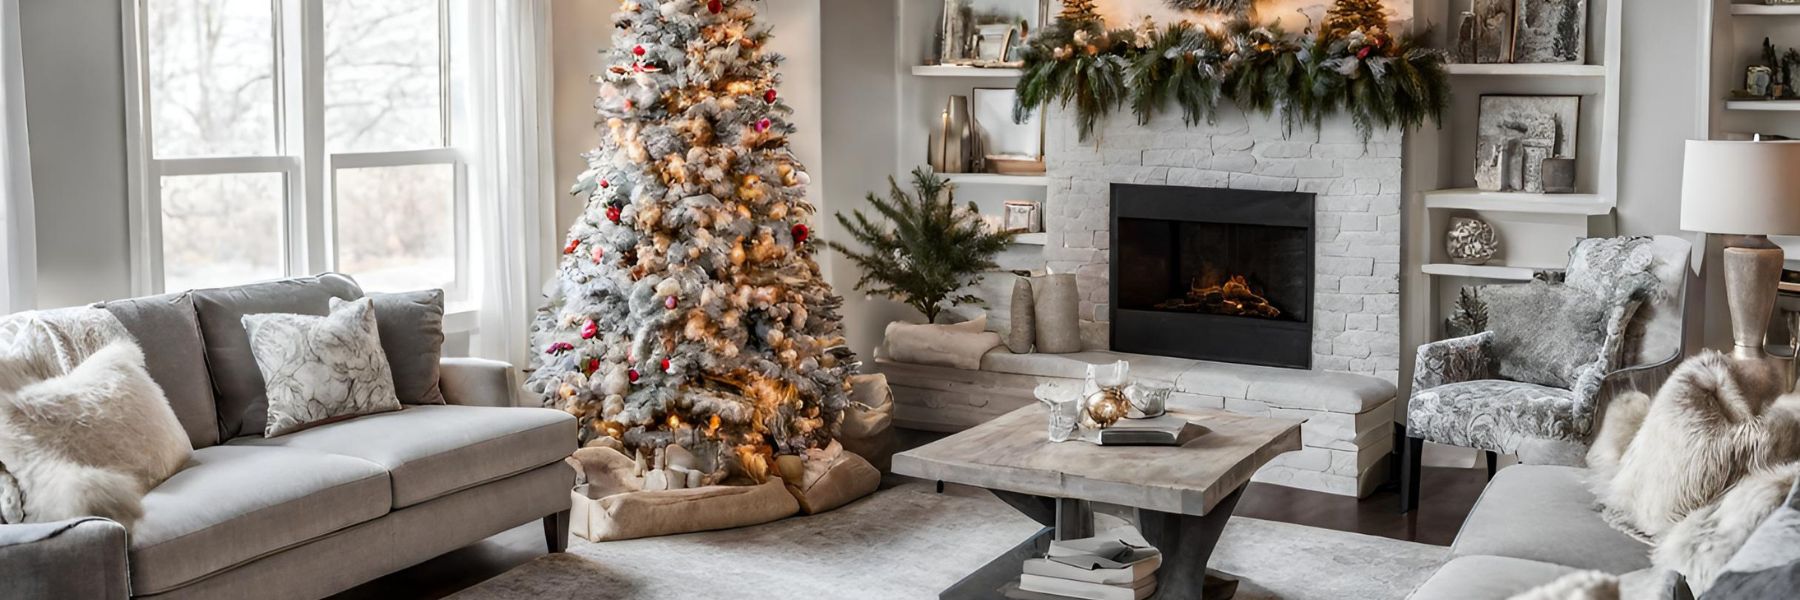 Flocked Christmas Tree Decorating Ideas: 27 Beautiful Tips